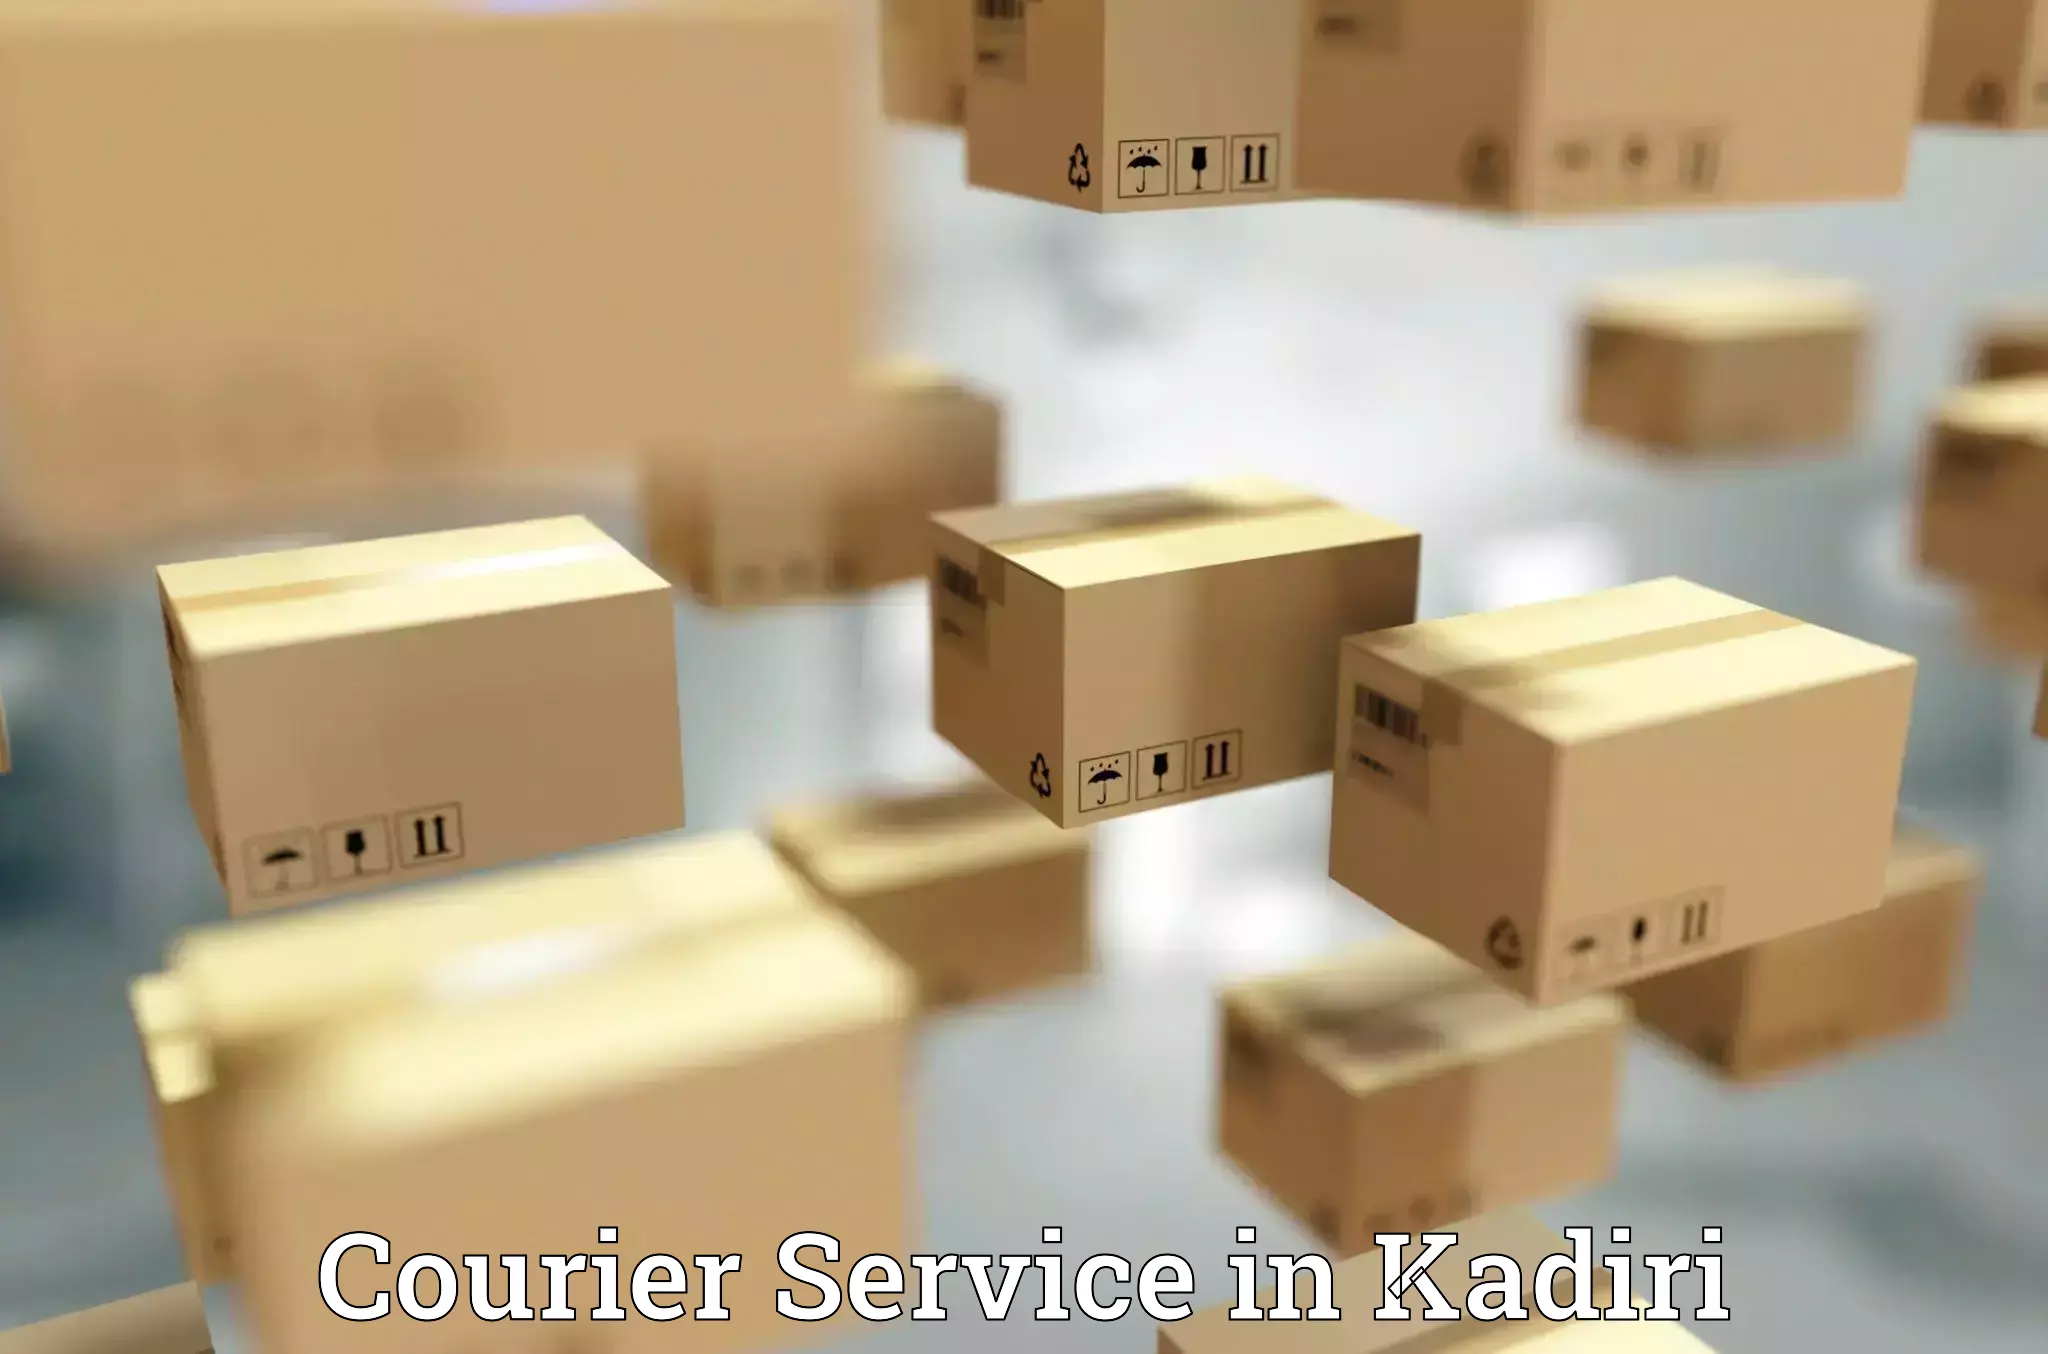 Rapid shipping services in Kadiri